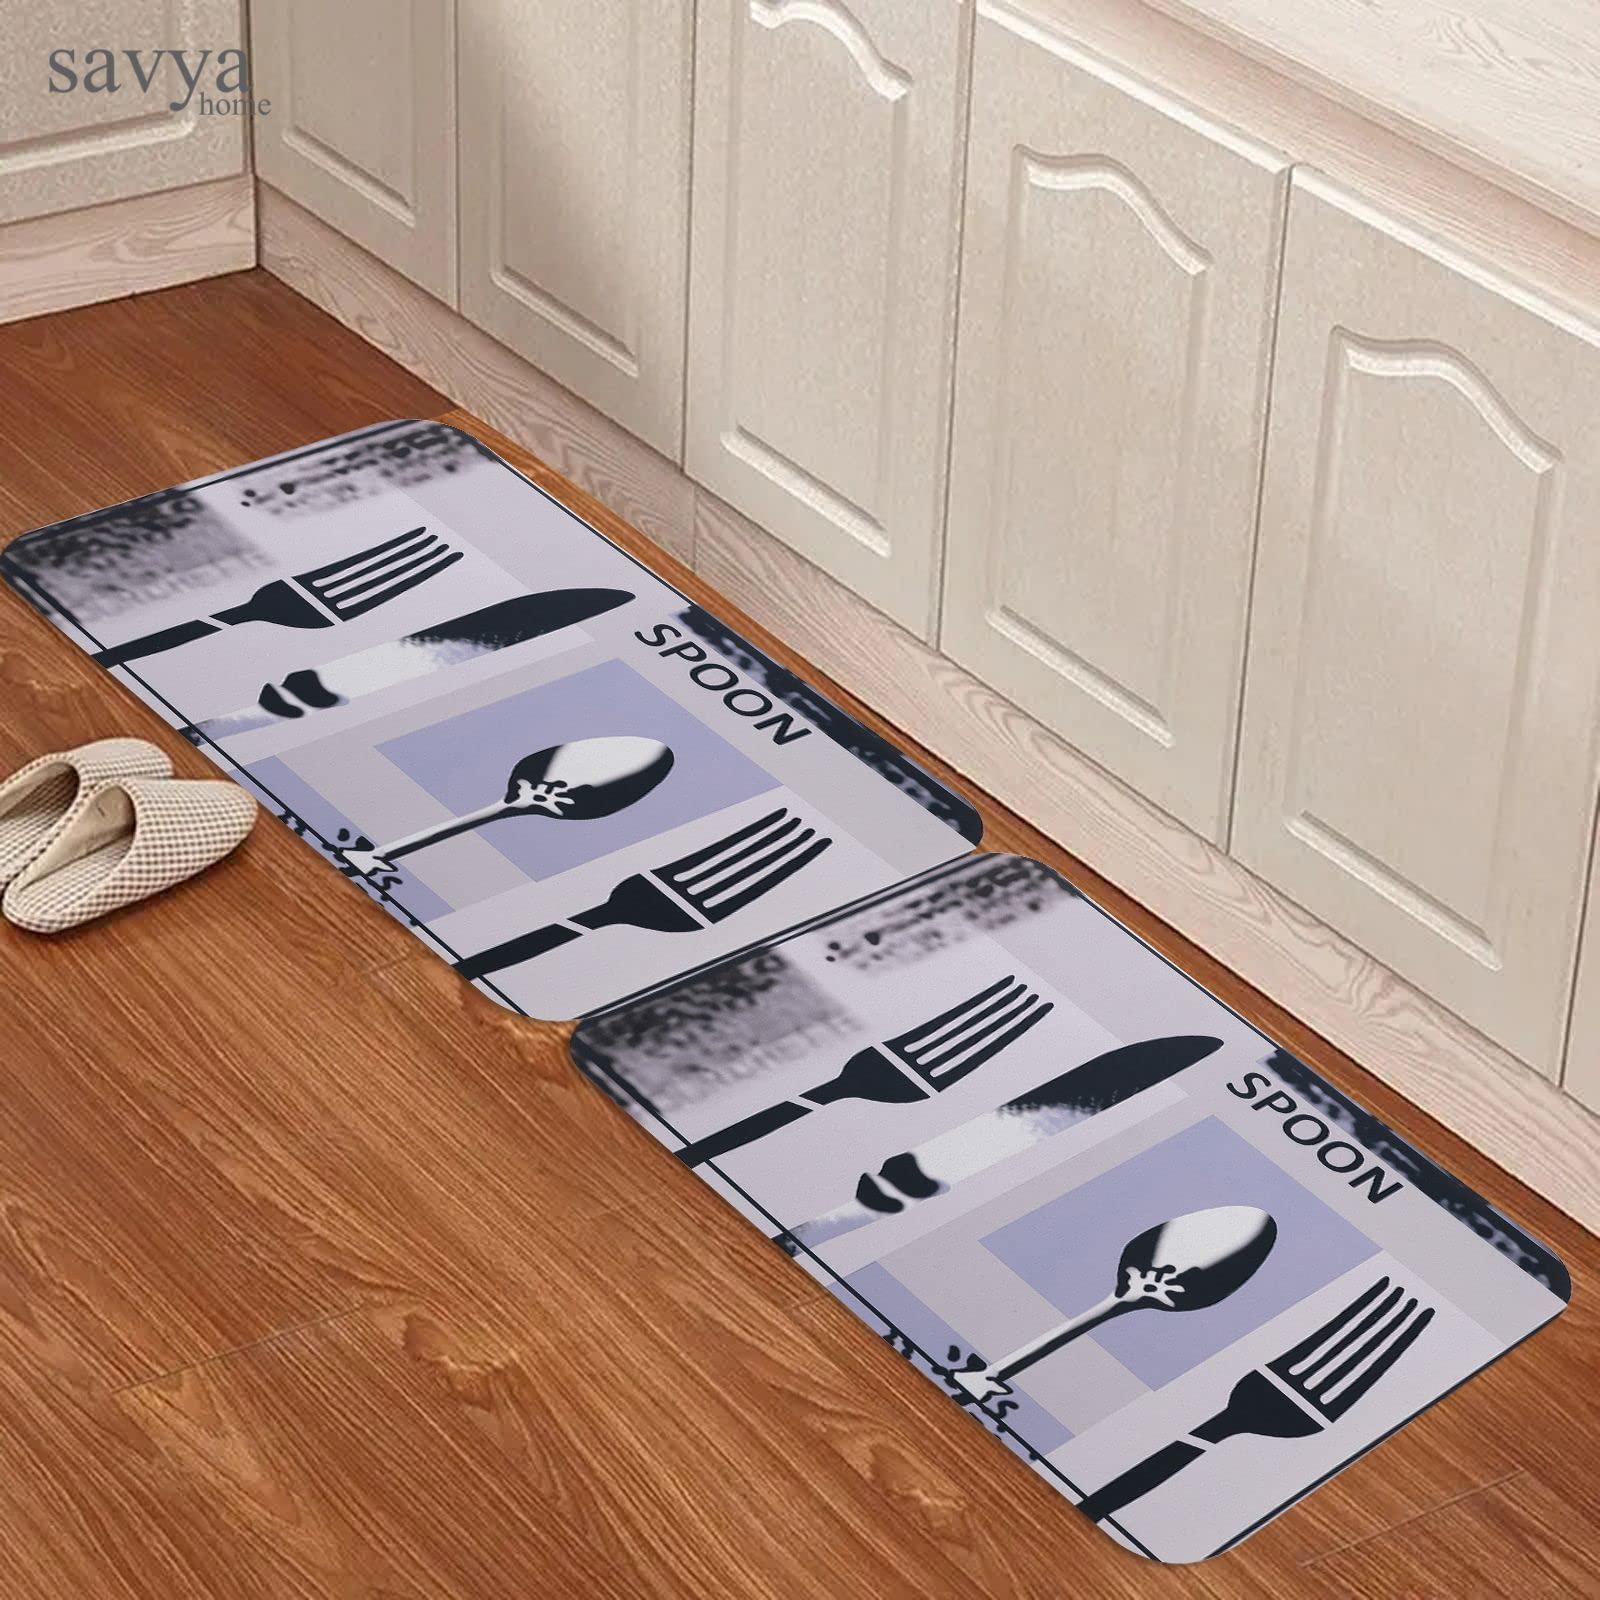 SAVYA HOME Kitchen Mats|| 60 x 40 ||Anti-Skid Mat for Living Room,Bathroom,Shower,Bathtub mat,Multipurpose Mat (Grey)